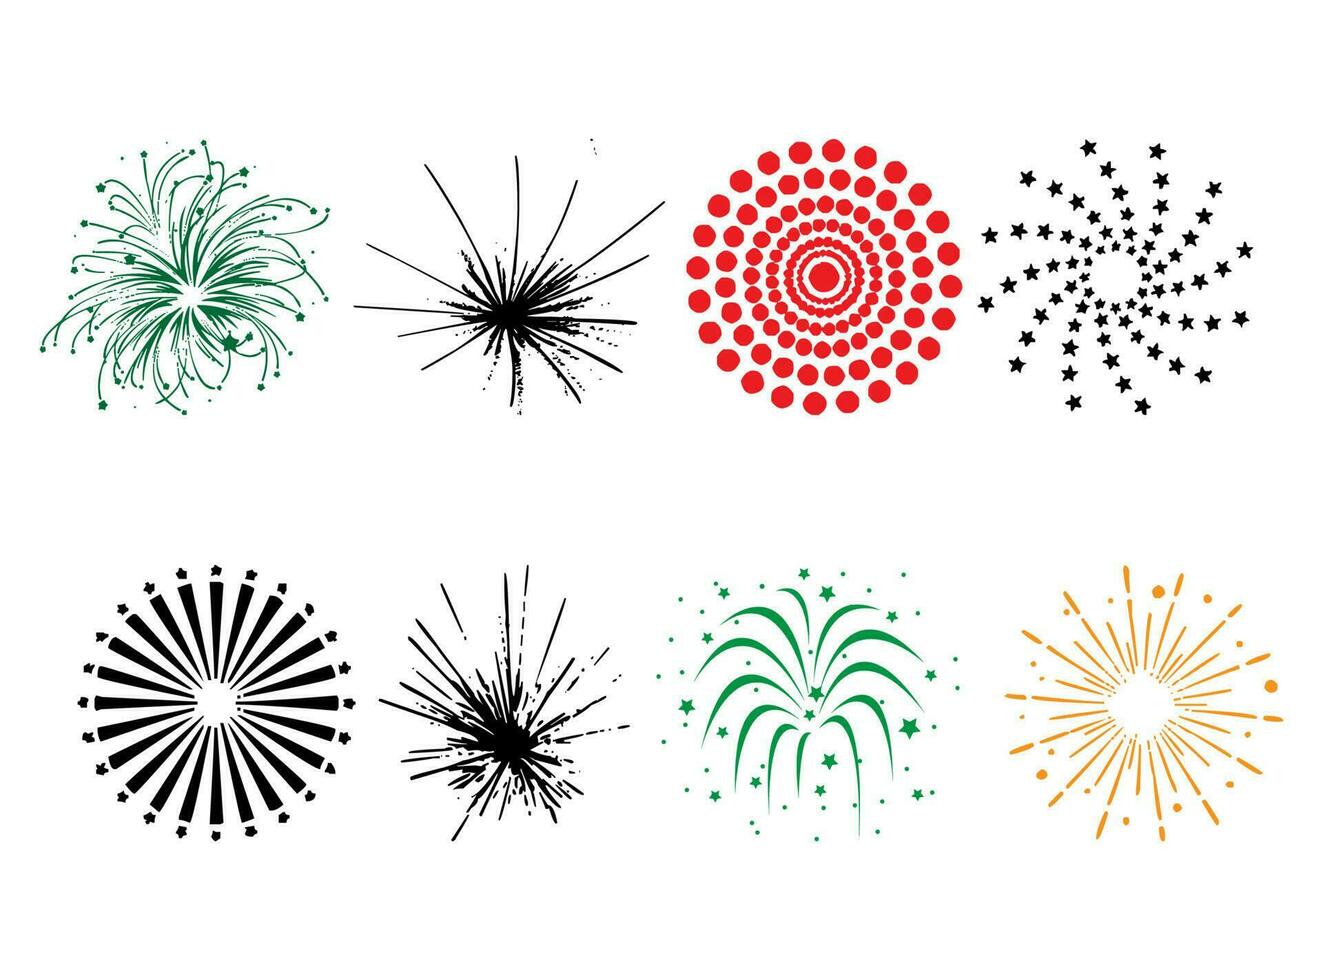 Fireworks and stars. Fireworks set, design element for holidays, celebration party, anniversary. Colorful modern explosion vector illustration.